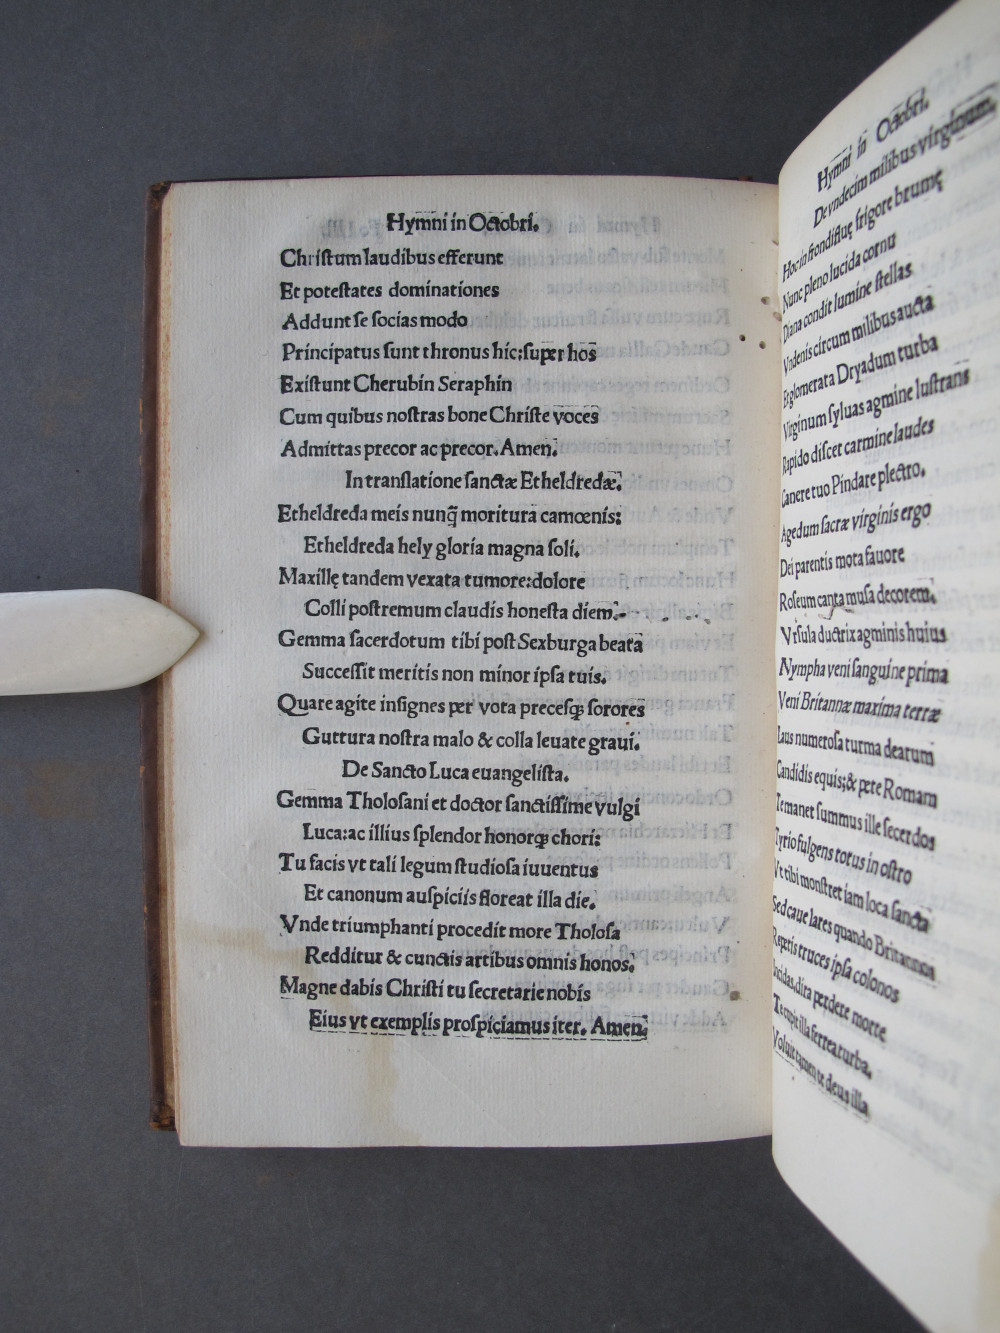 Folio 53 verso